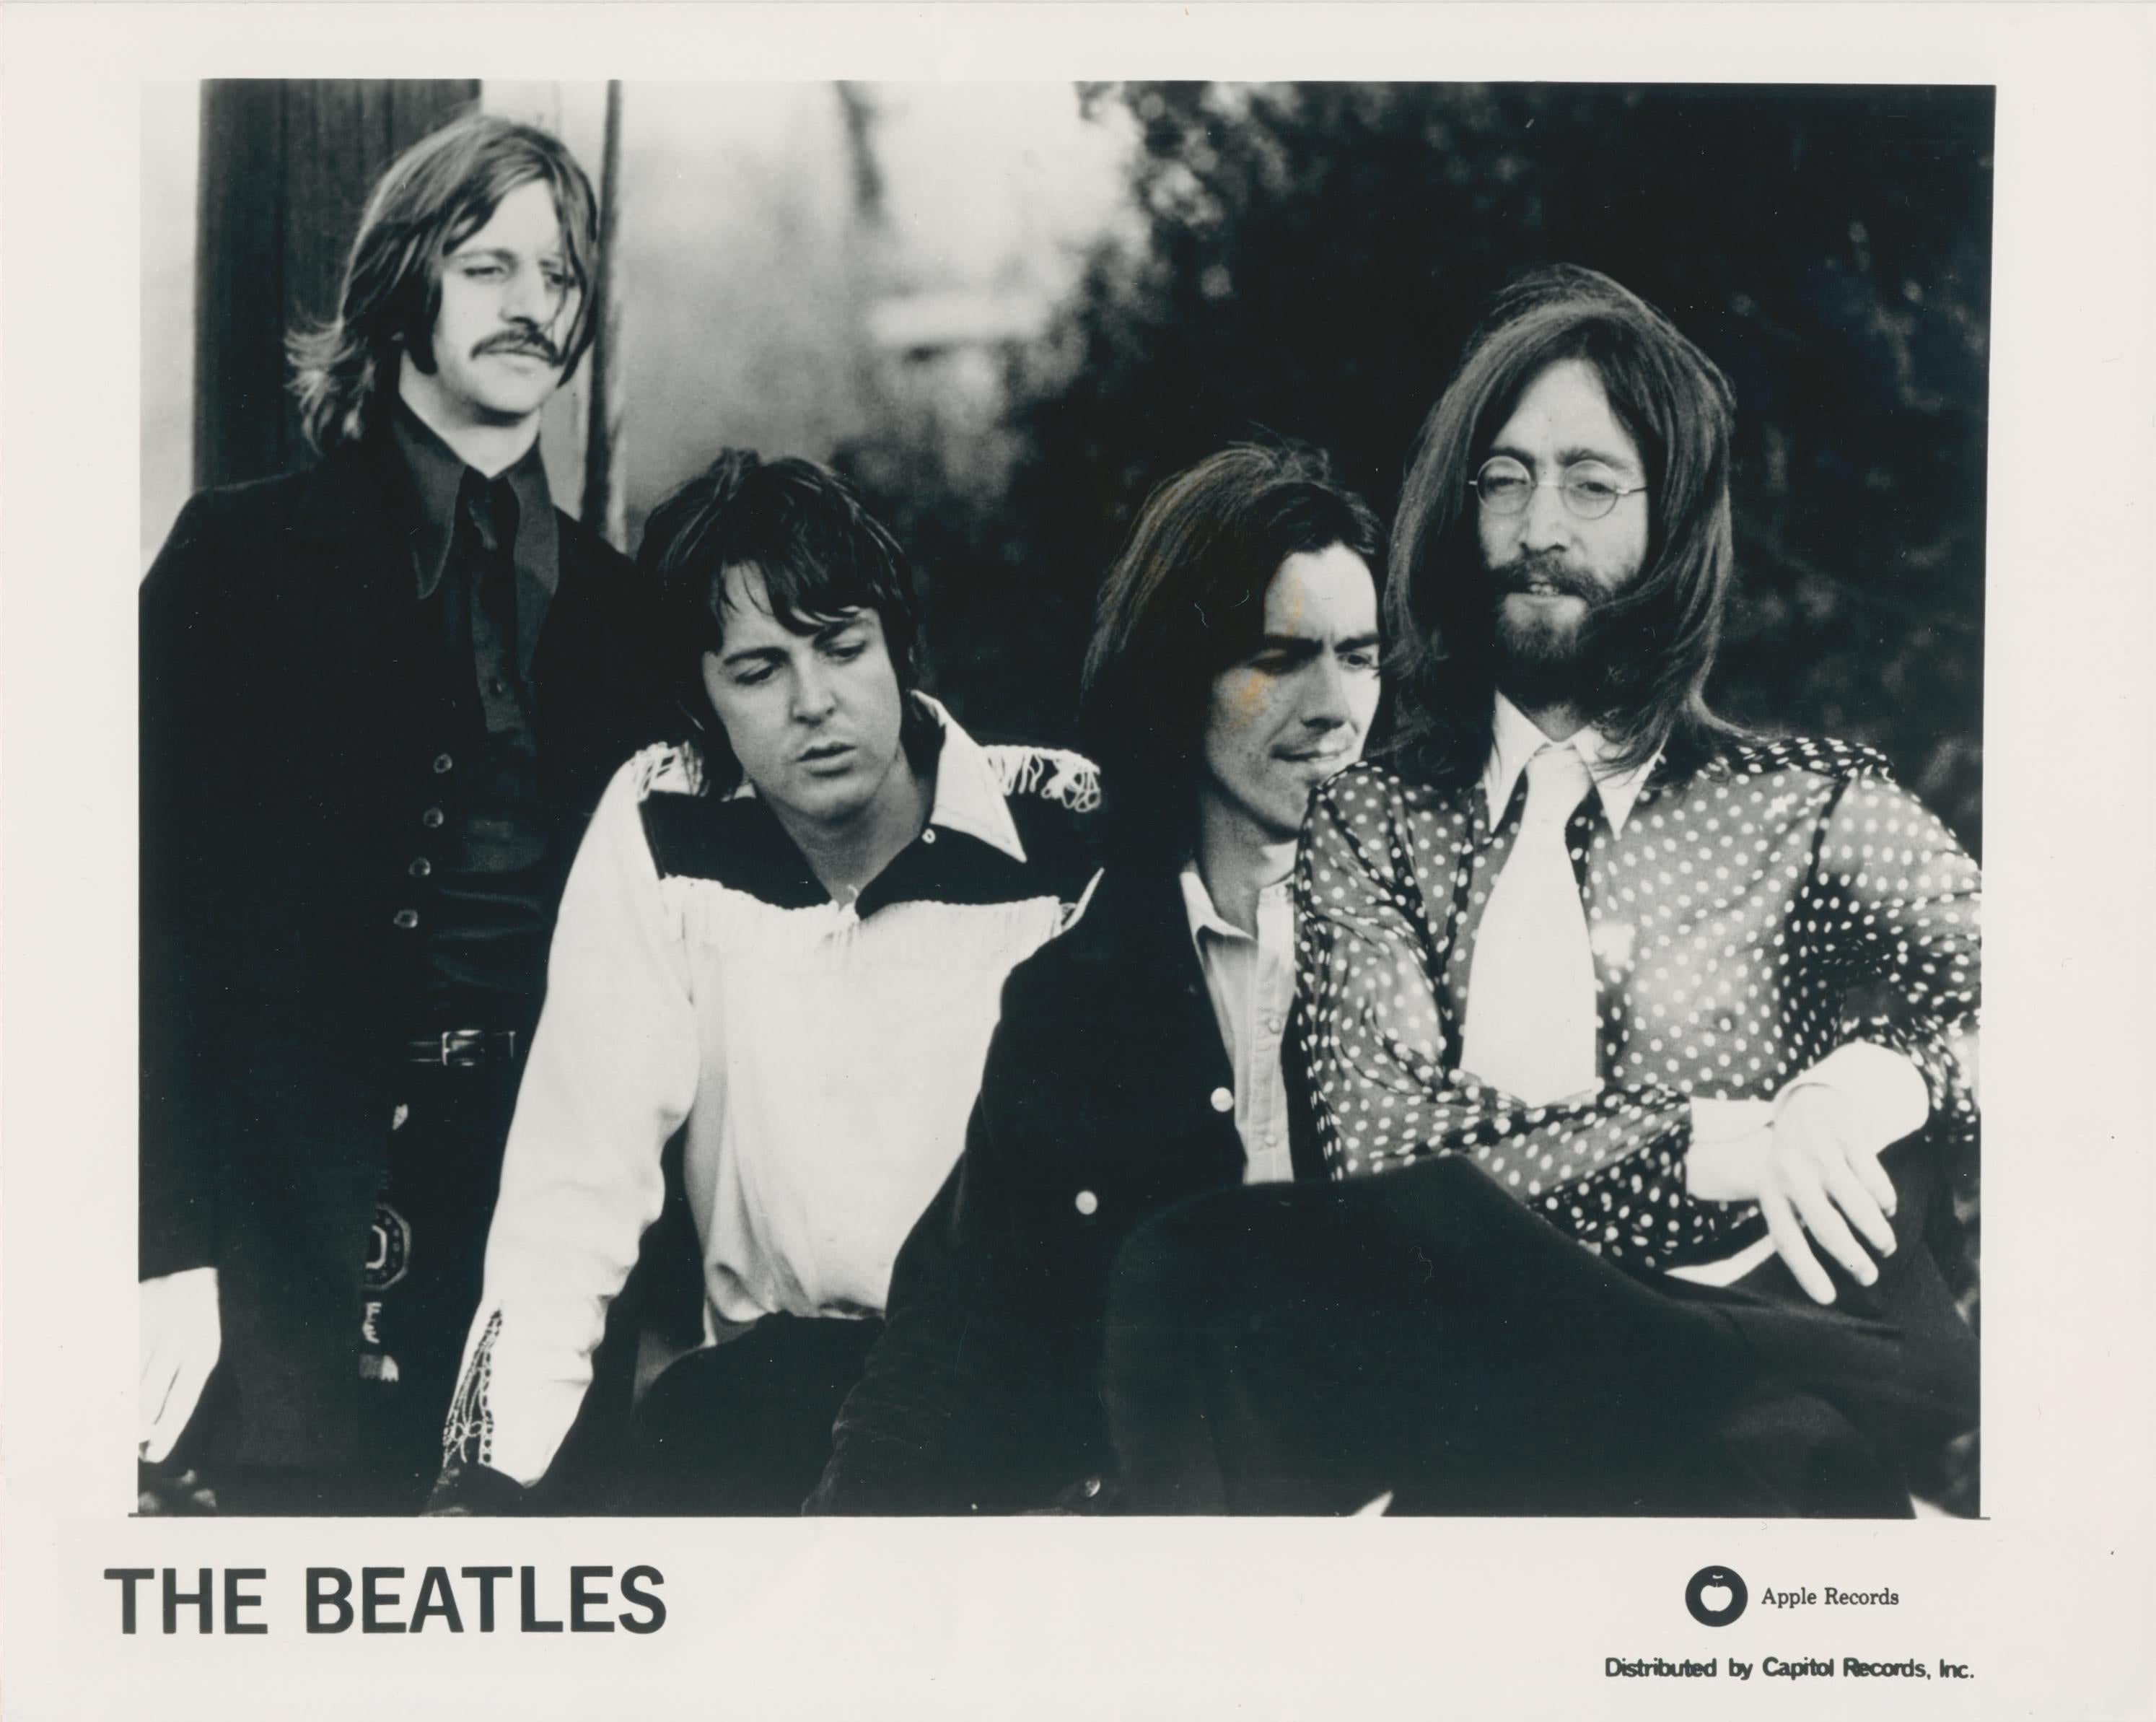 Michael Ochs Portrait Photograph - The Beatles, Black and White Photography, 1960s, 22, 2 x 25, 2 cm